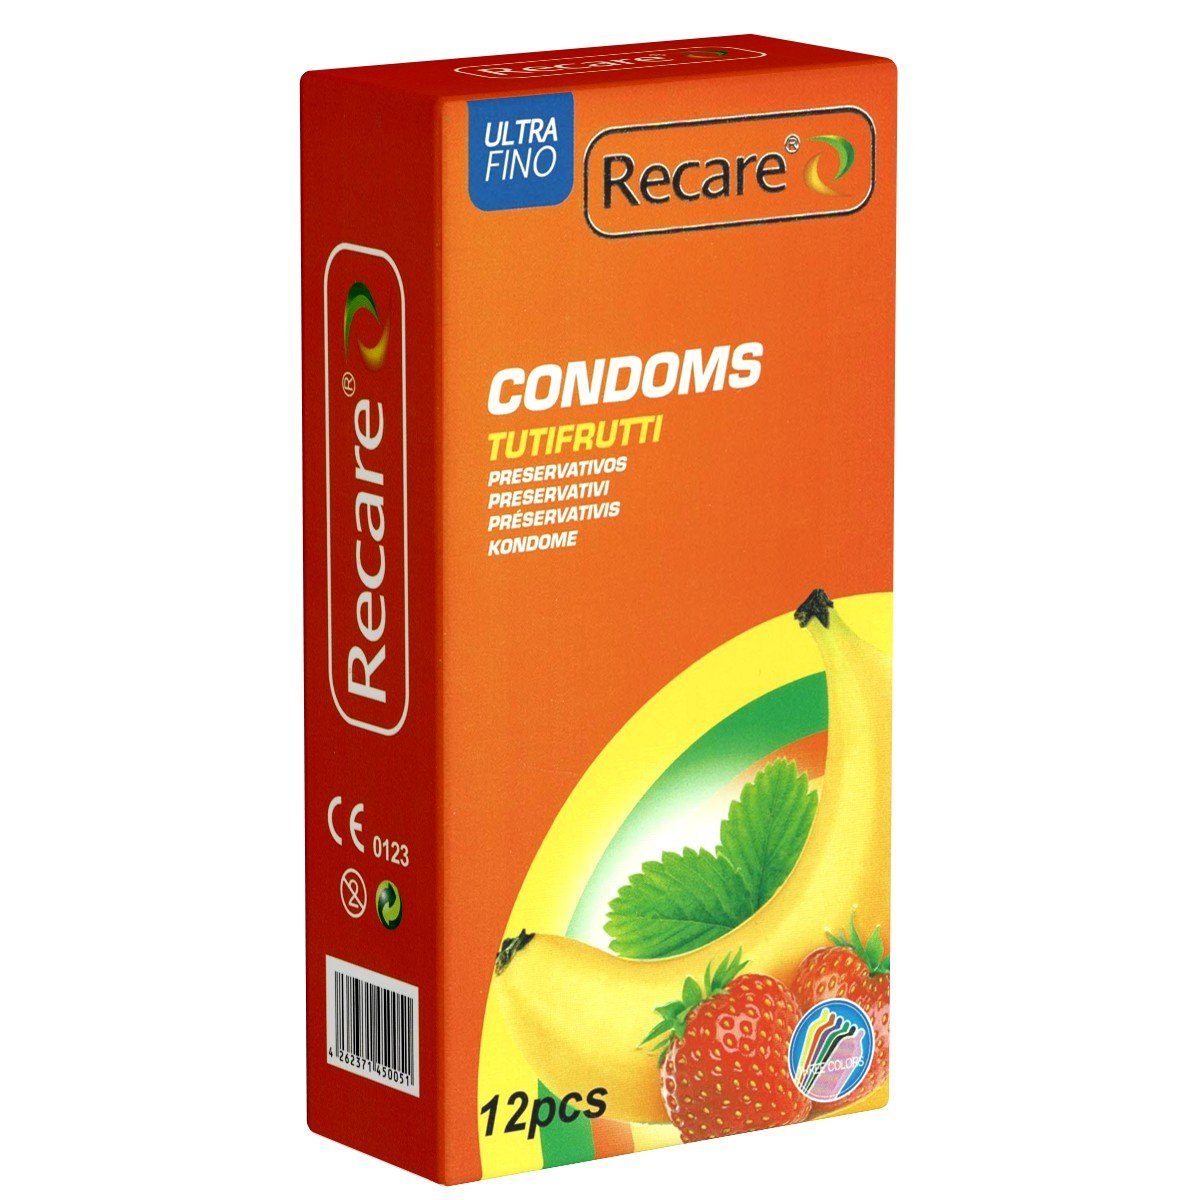 Recare Kondome Tuttifrutti - fruchtige Kondome Packung mit, 12 St., Kondome in drei verschiedenen Sorten